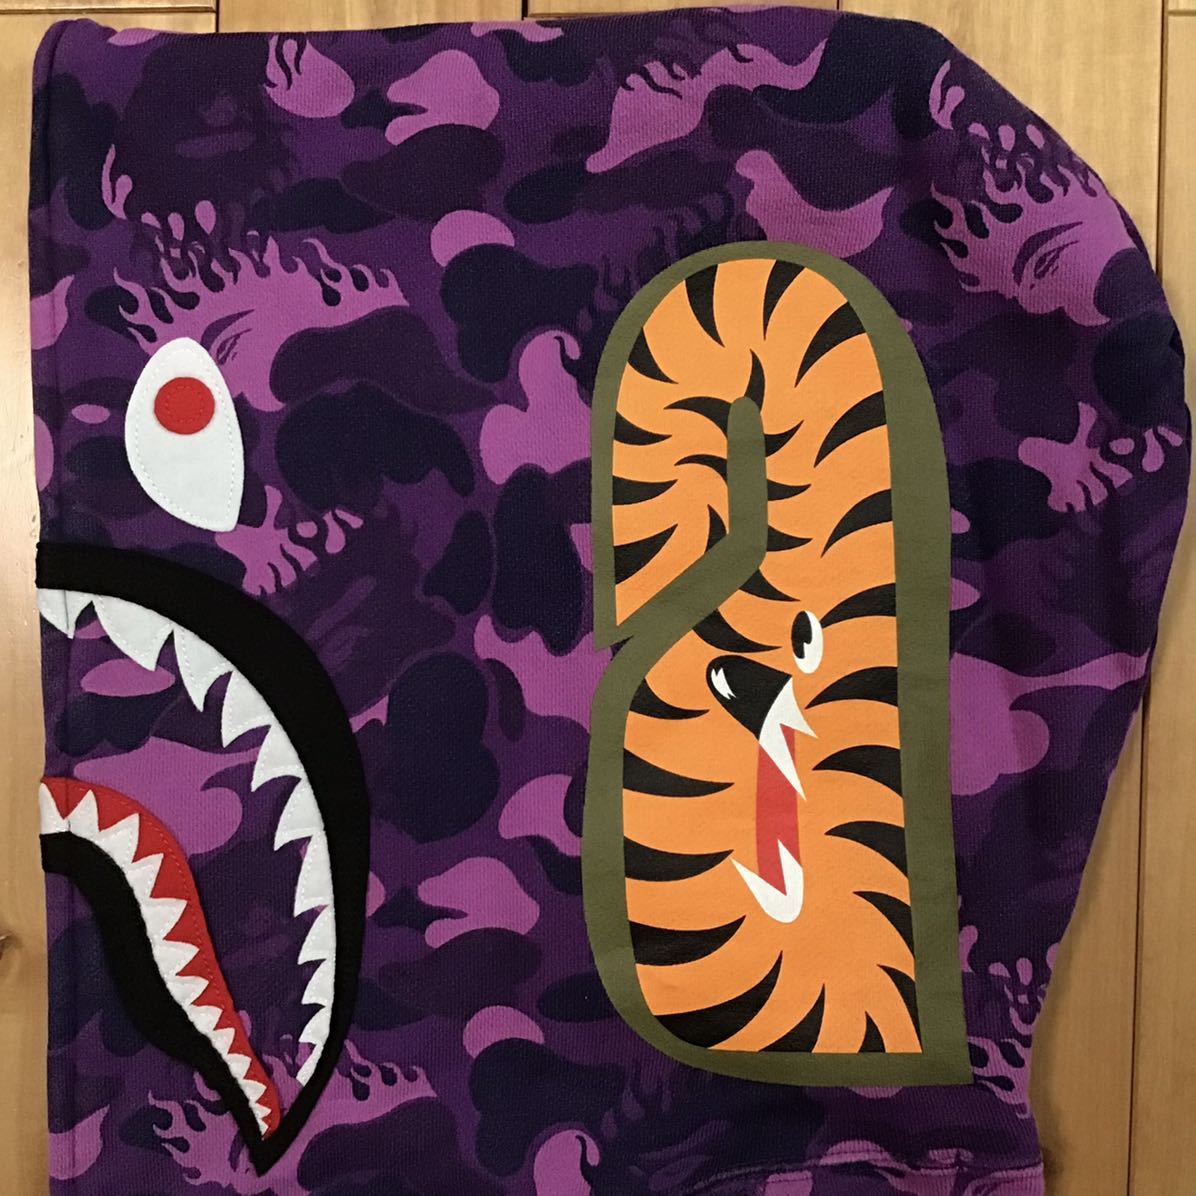 ★XL★ ★ムック限定★ Fire camo シャーク パーカー shark full zip hoodie a bathing ape BAPE purple camo エイプ ベイプ NIGO 迷彩 z9_画像5